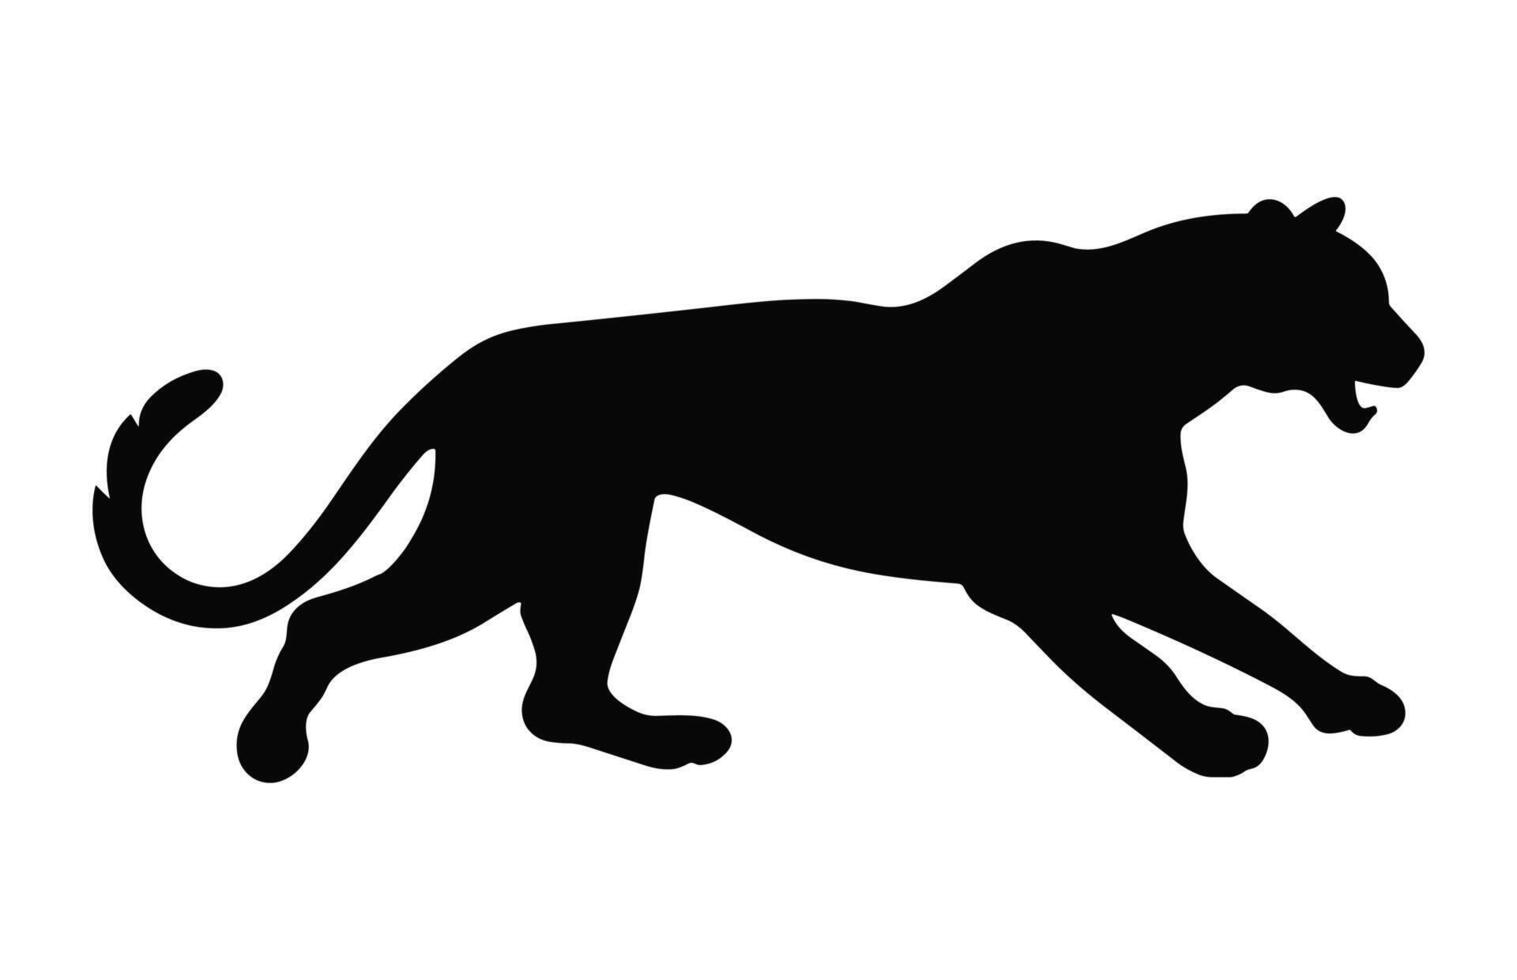 Jachtluipaard zwart silhouet vector geïsoleerd Aan een wit achtergrond, rennen Jachtluipaard clip art